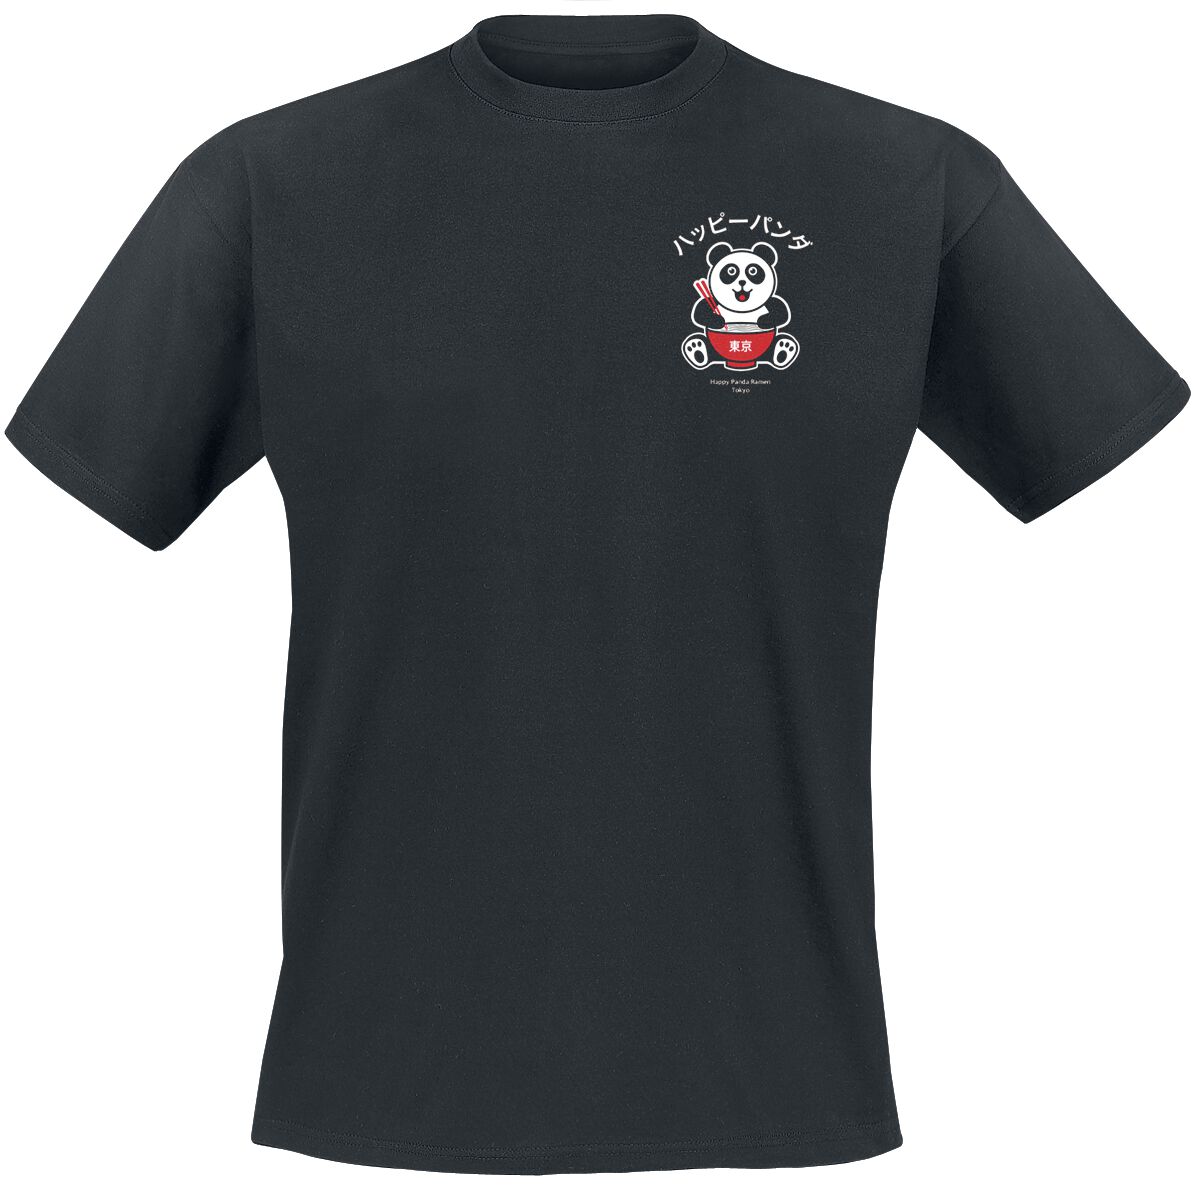 The Official Ramen Company Happy Panda Ramen T-Shirt black